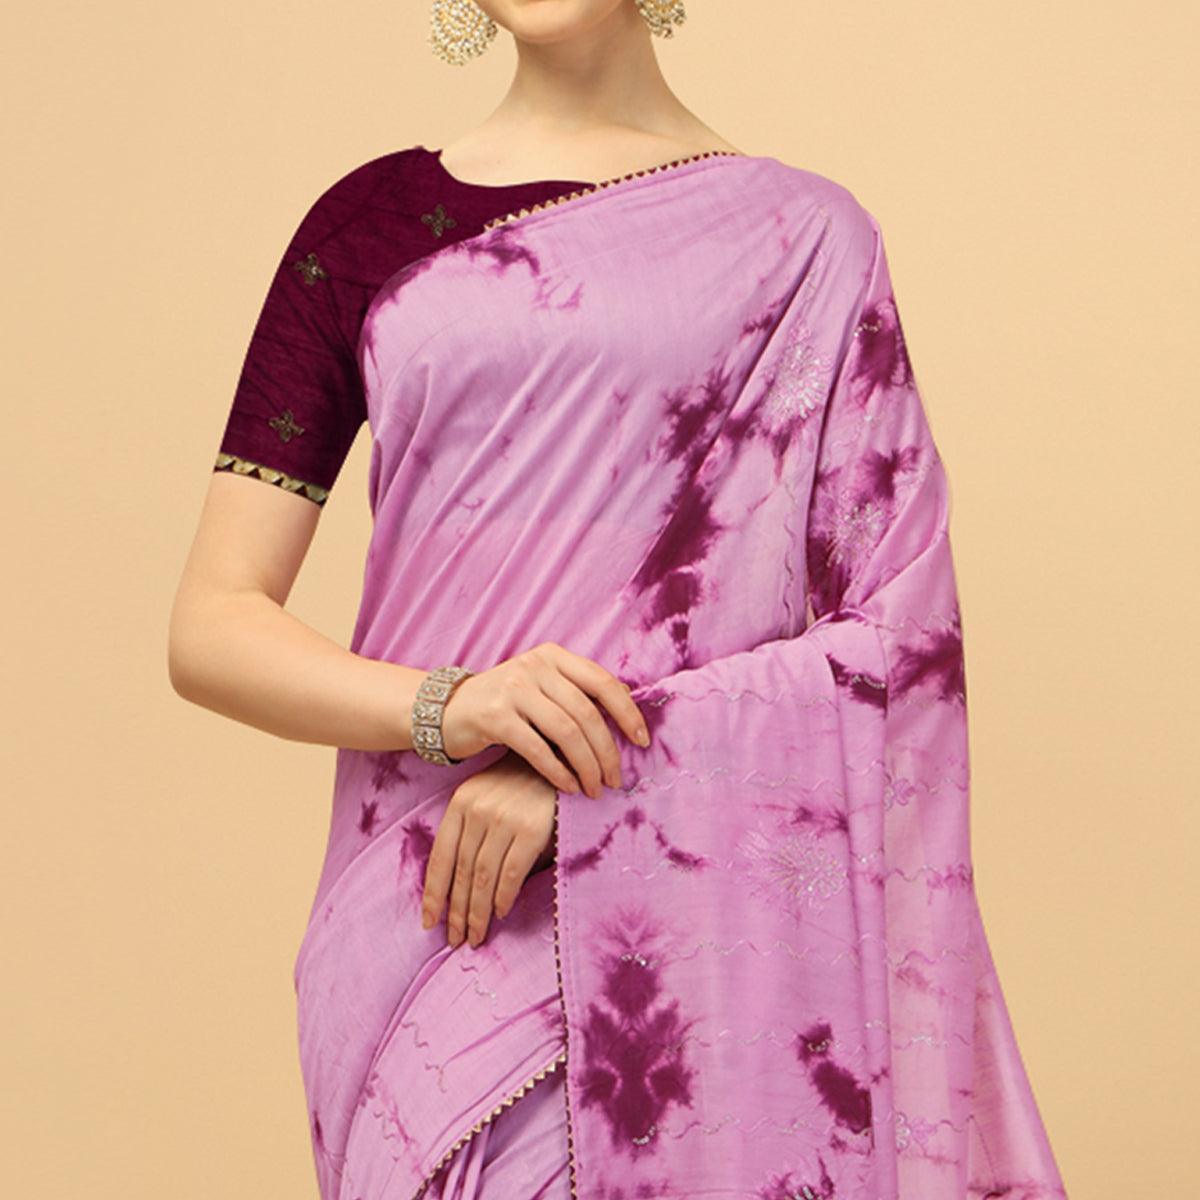 Light Purple Sequence Embroidered Chanderi Saree - Peachmode